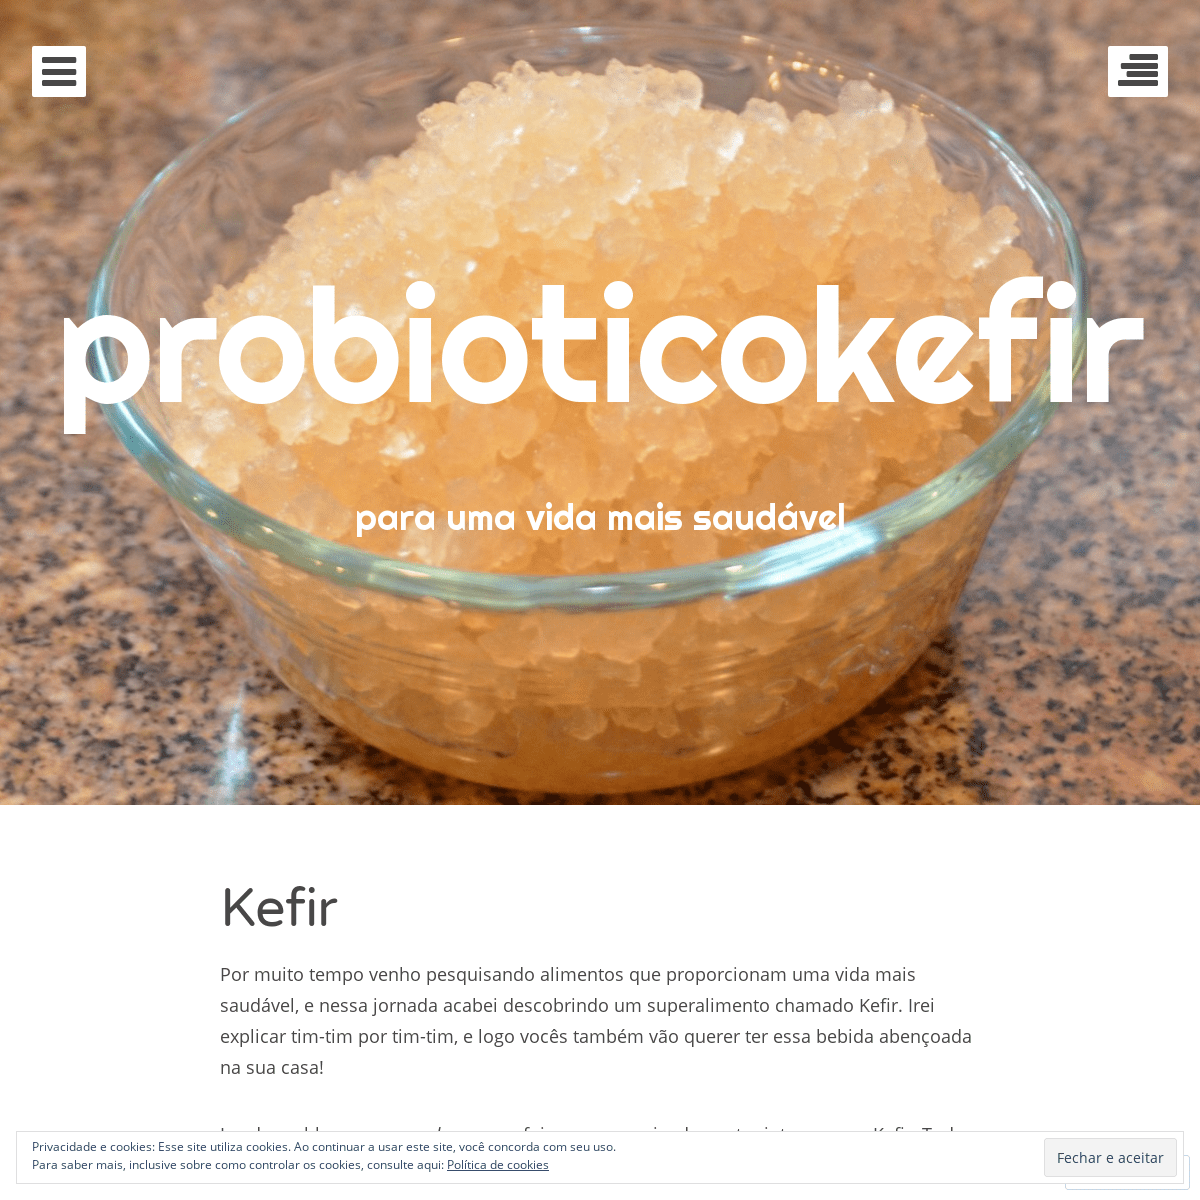 A complete backup of probioticokefir.wordpress.com